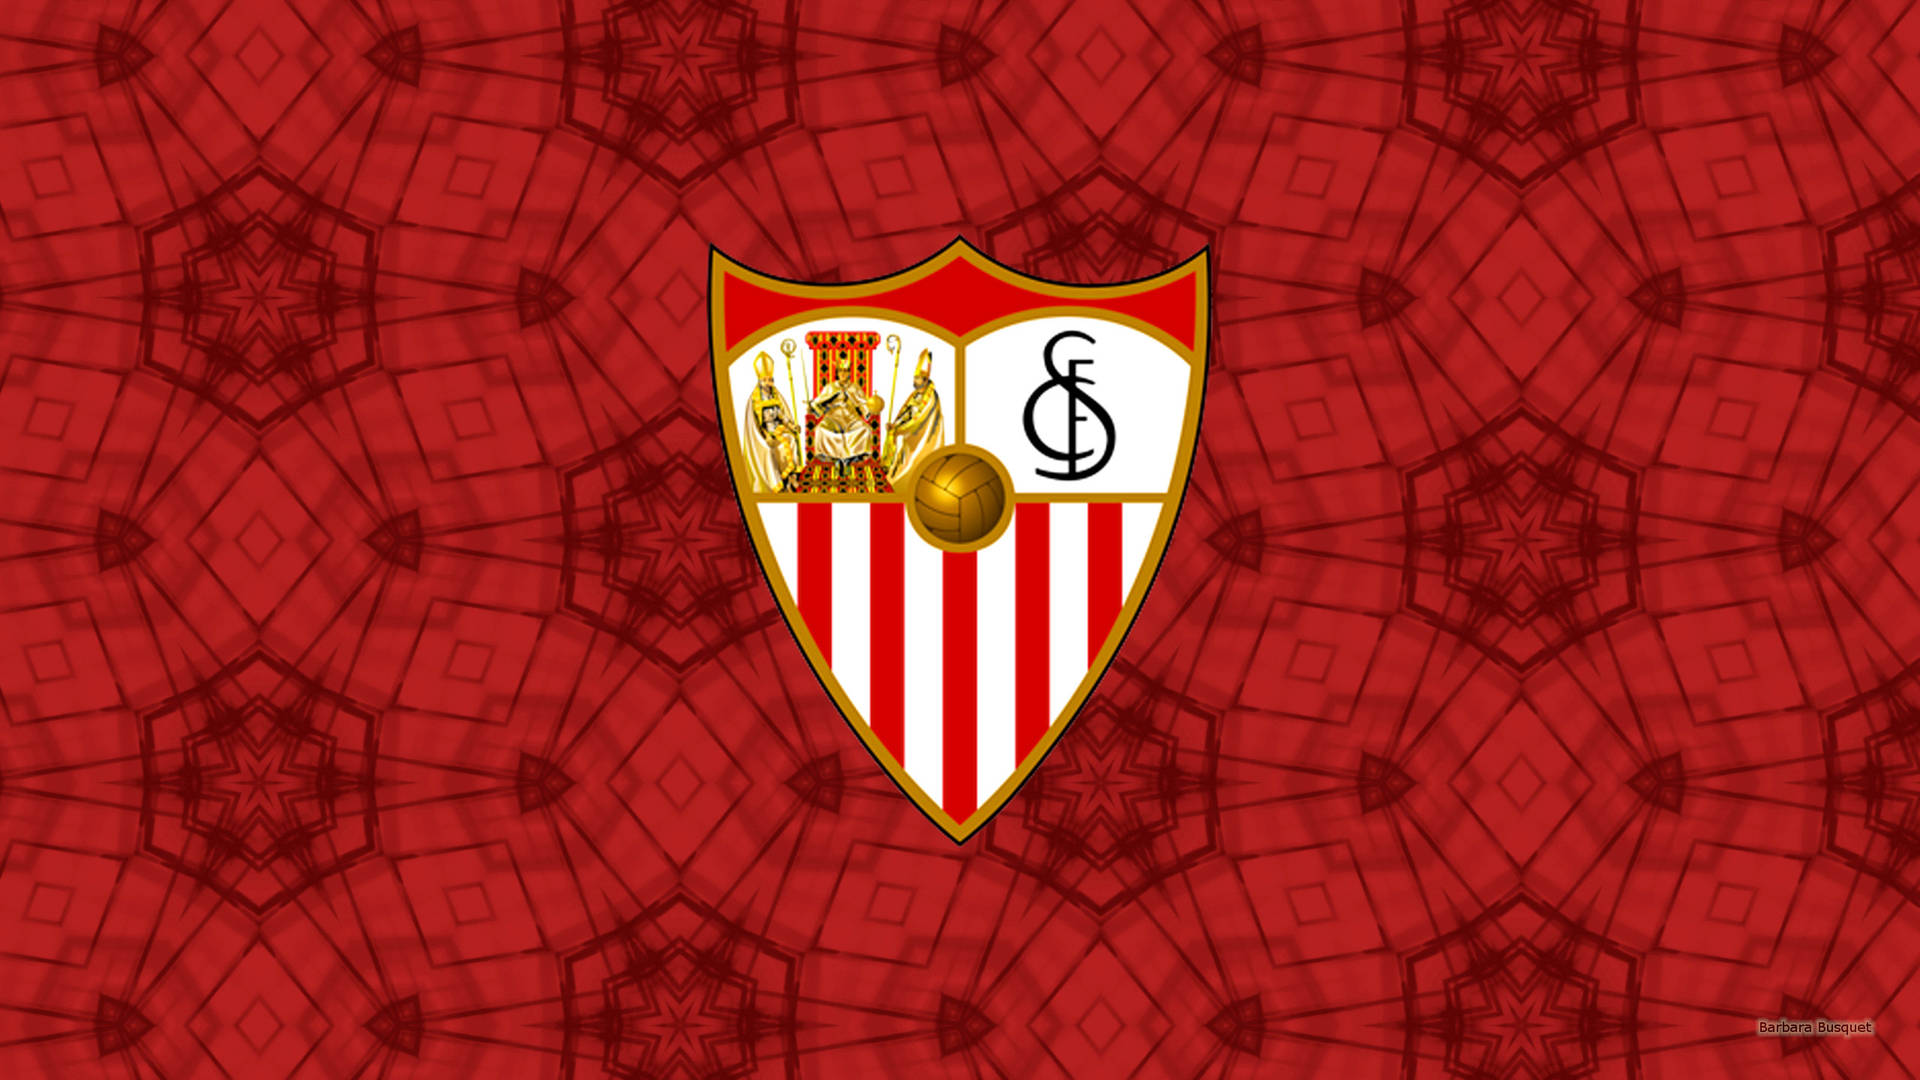 Sevilla Fc Logo In Geometric Art